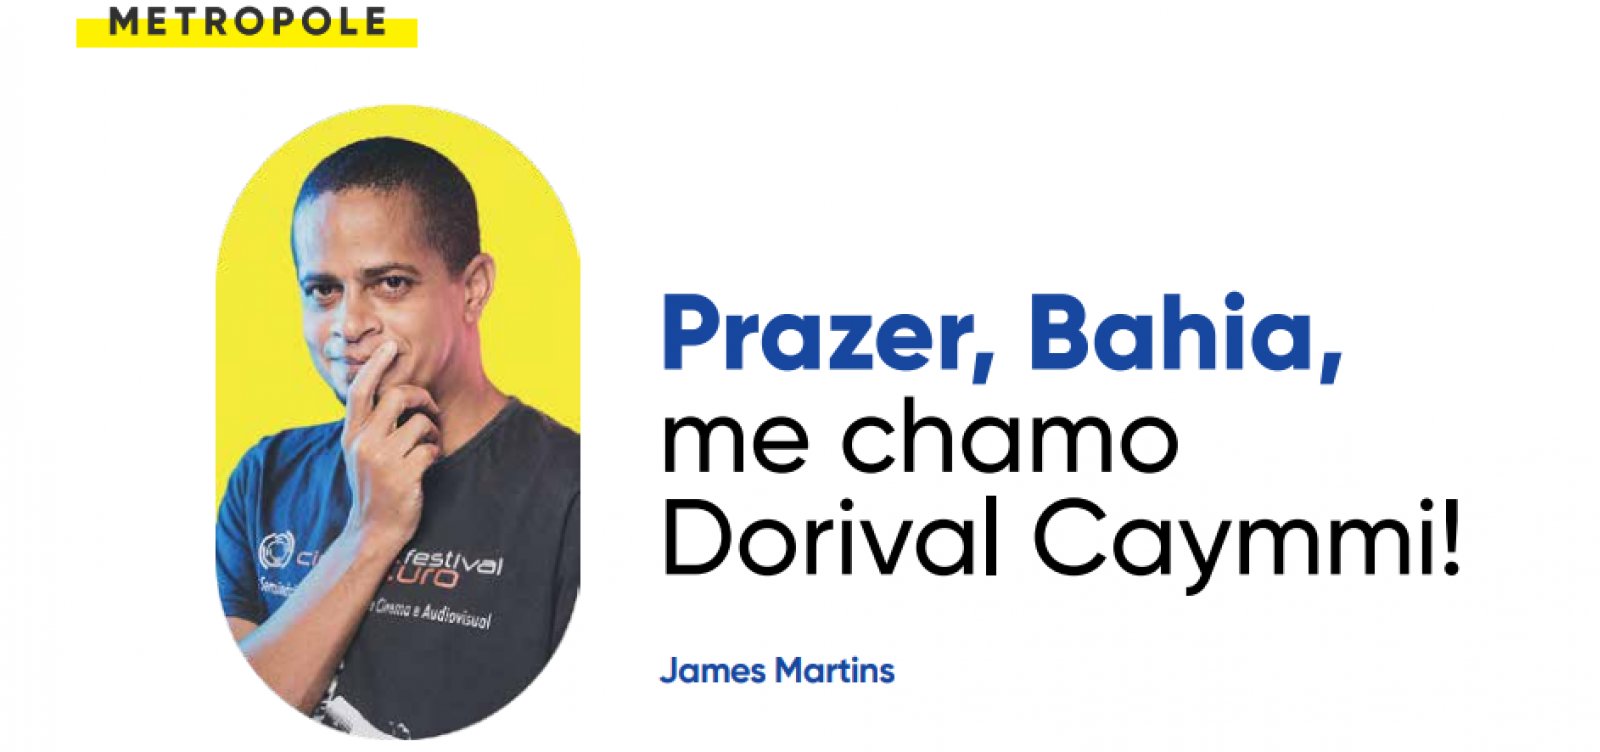 Prazer, Bahia, me chamo Dorival Caymmi!